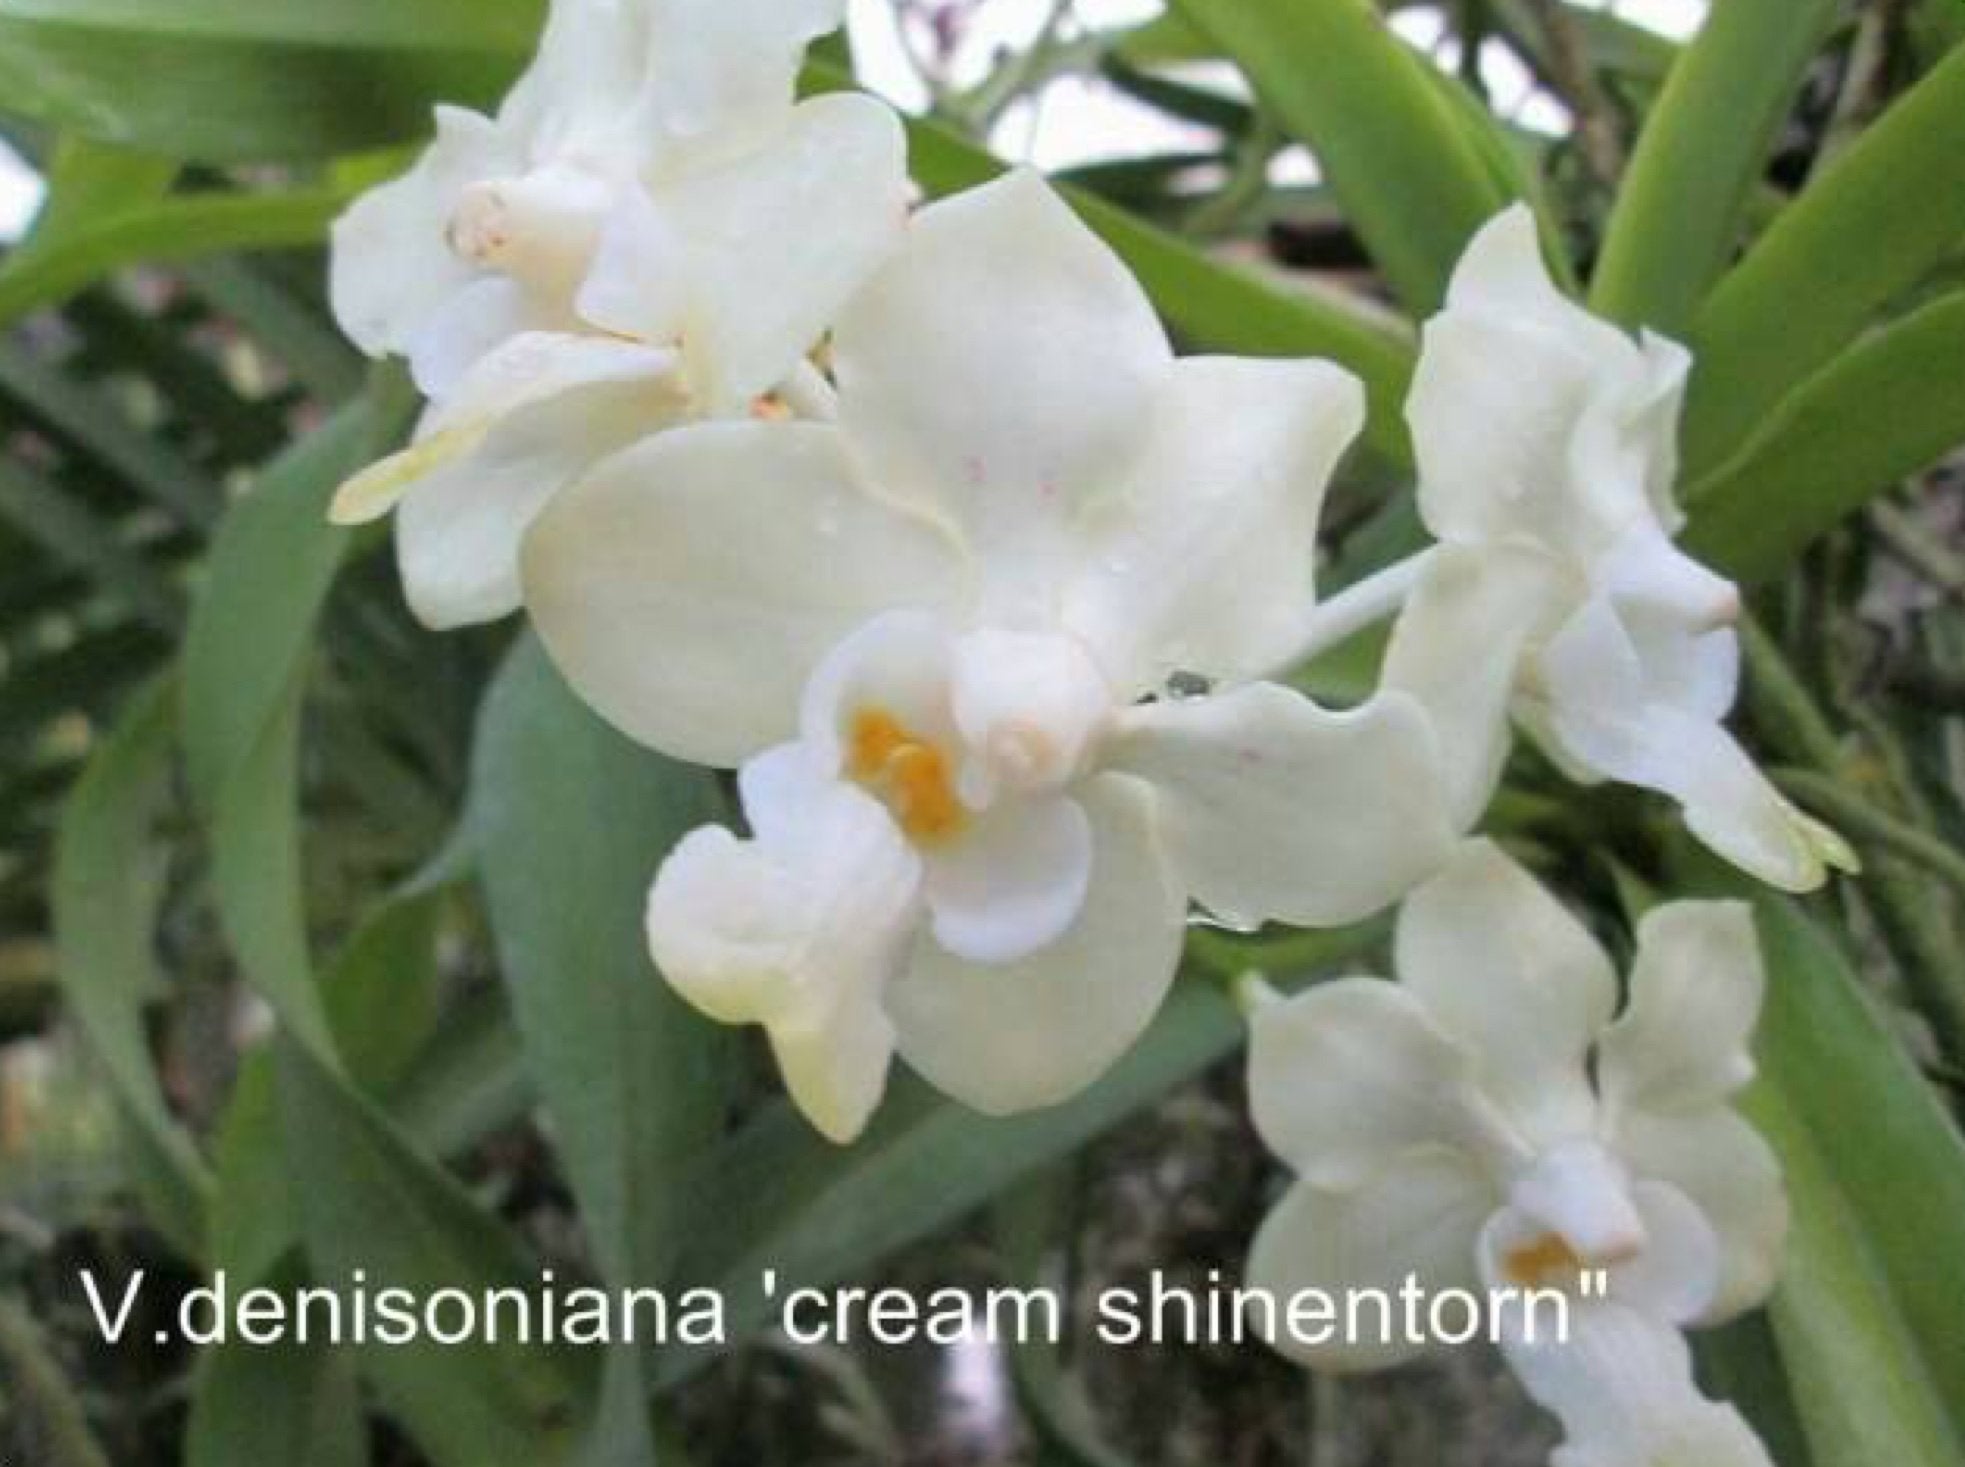 Vanda denisoniana "Cream Shinentorn" "Big"